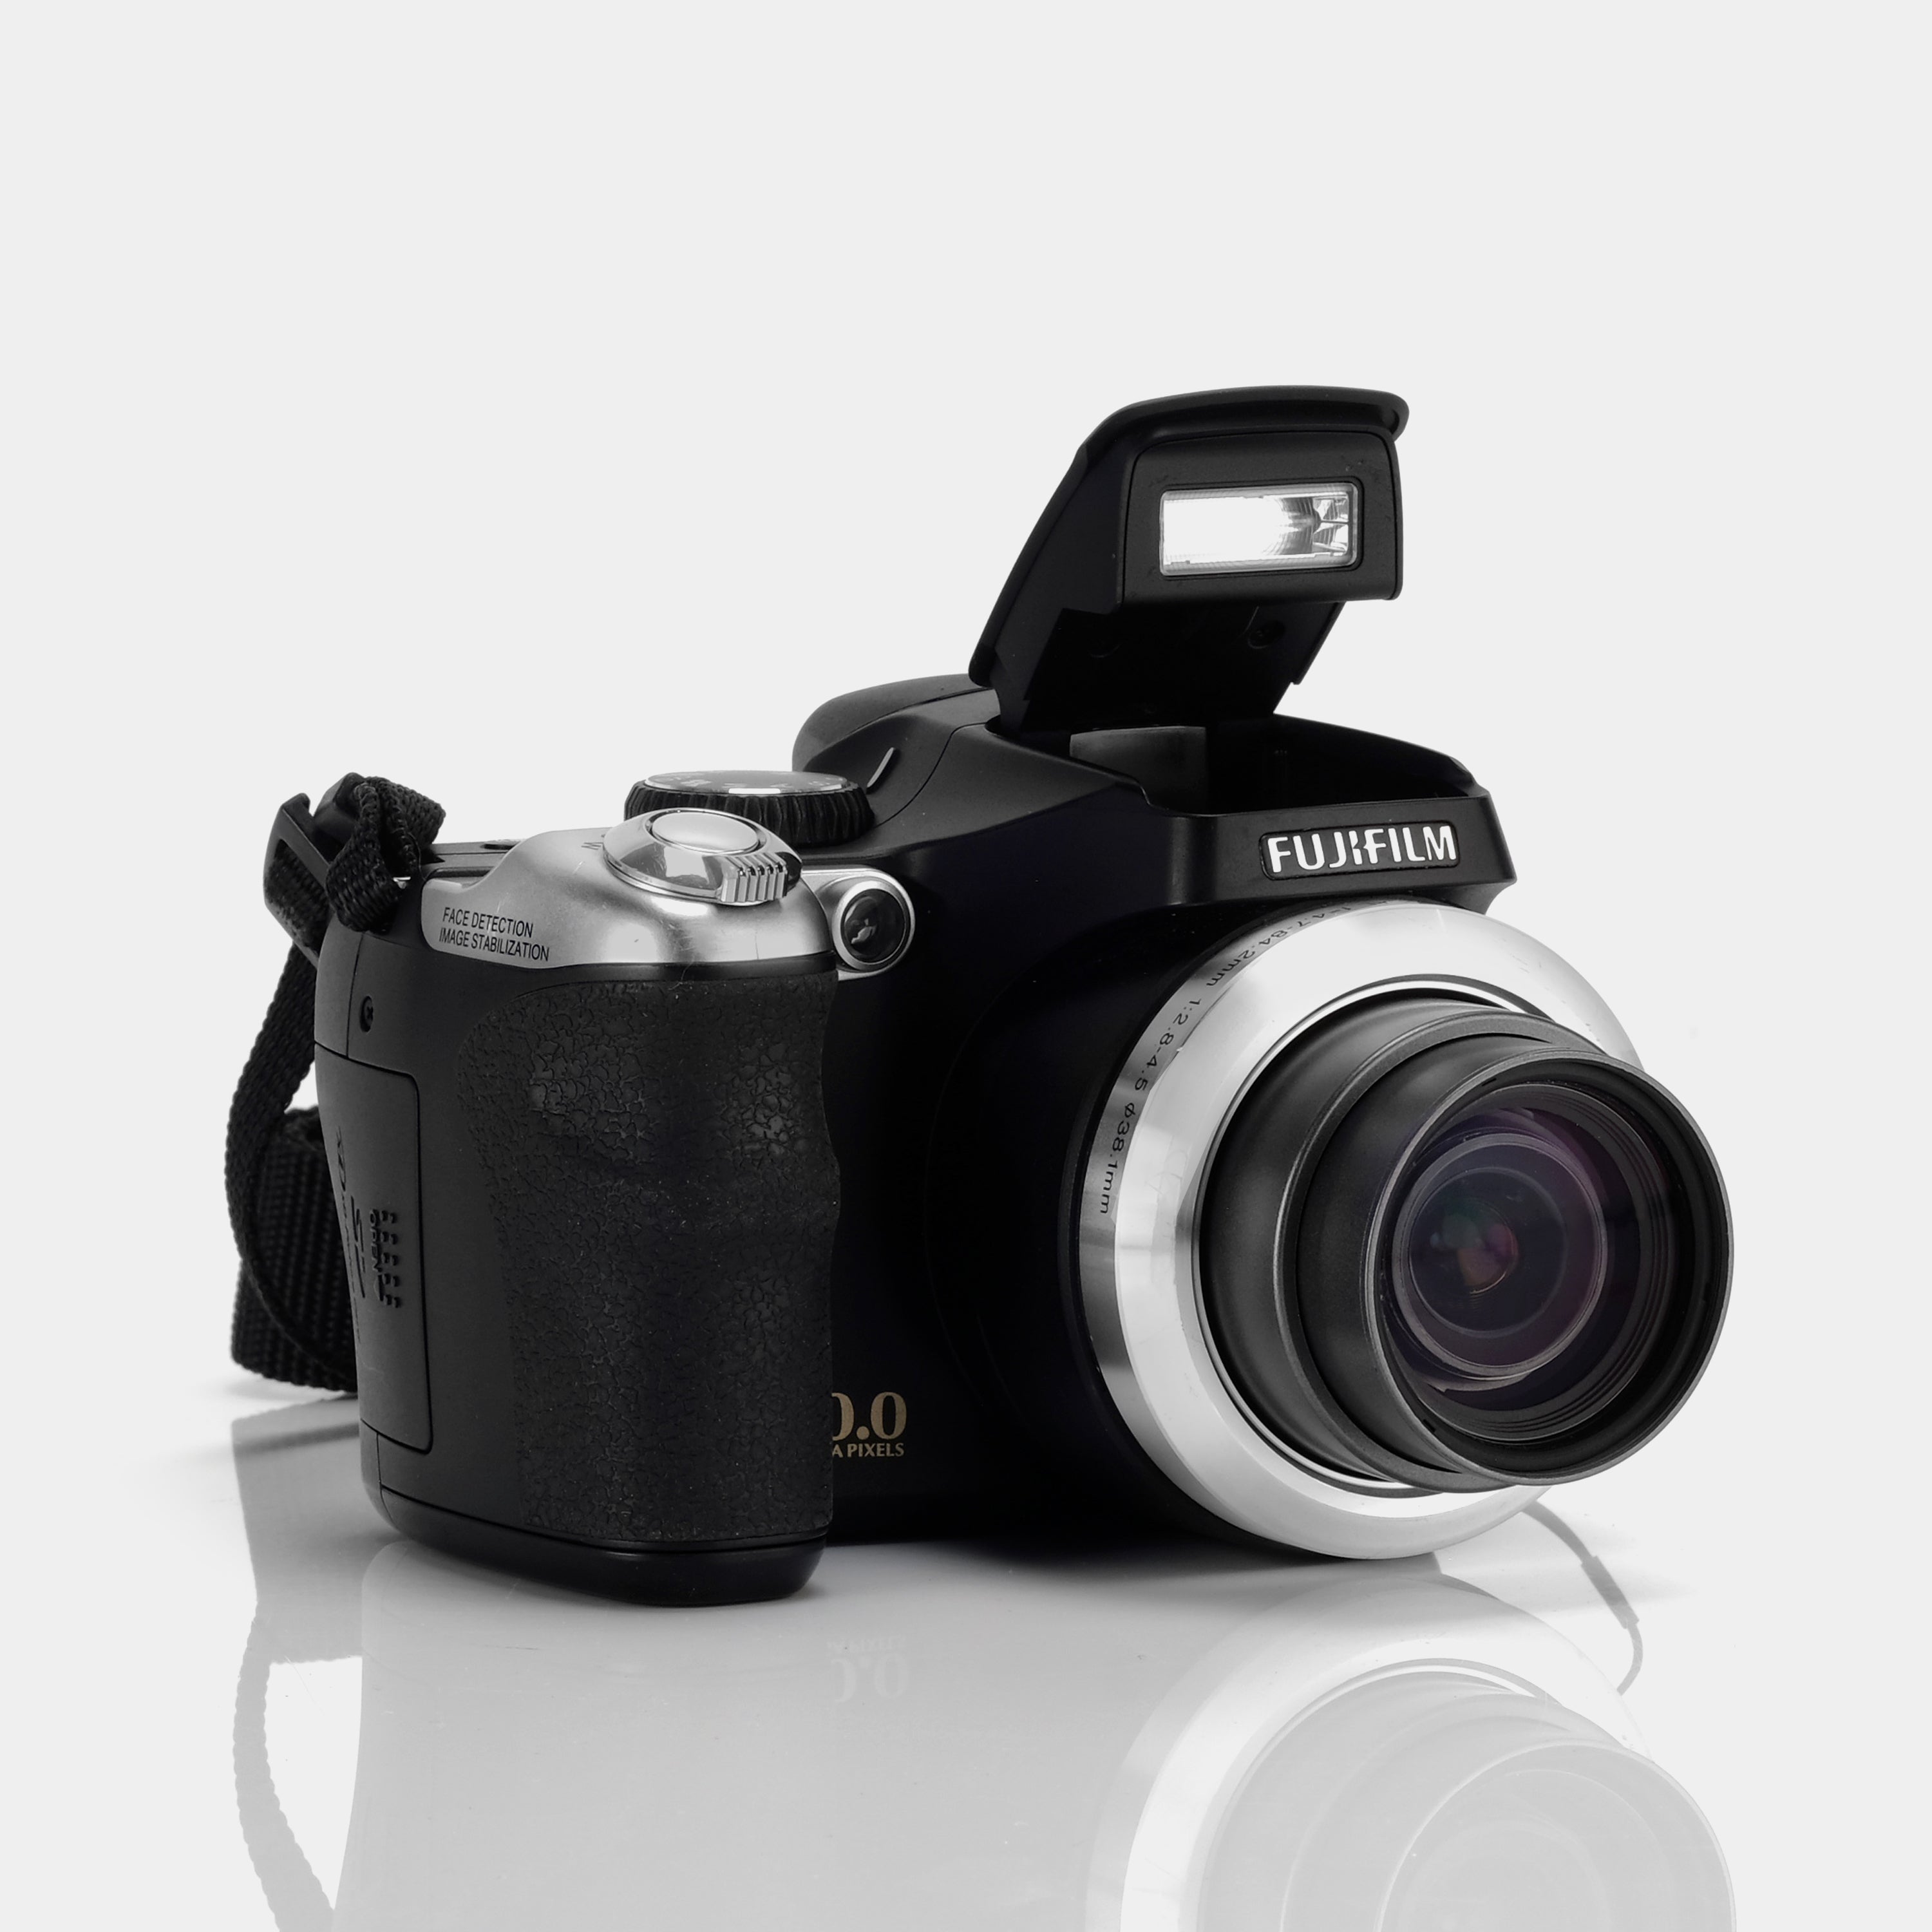 Fujifilm FinePix S8100fd Point Shoot Digital Camera